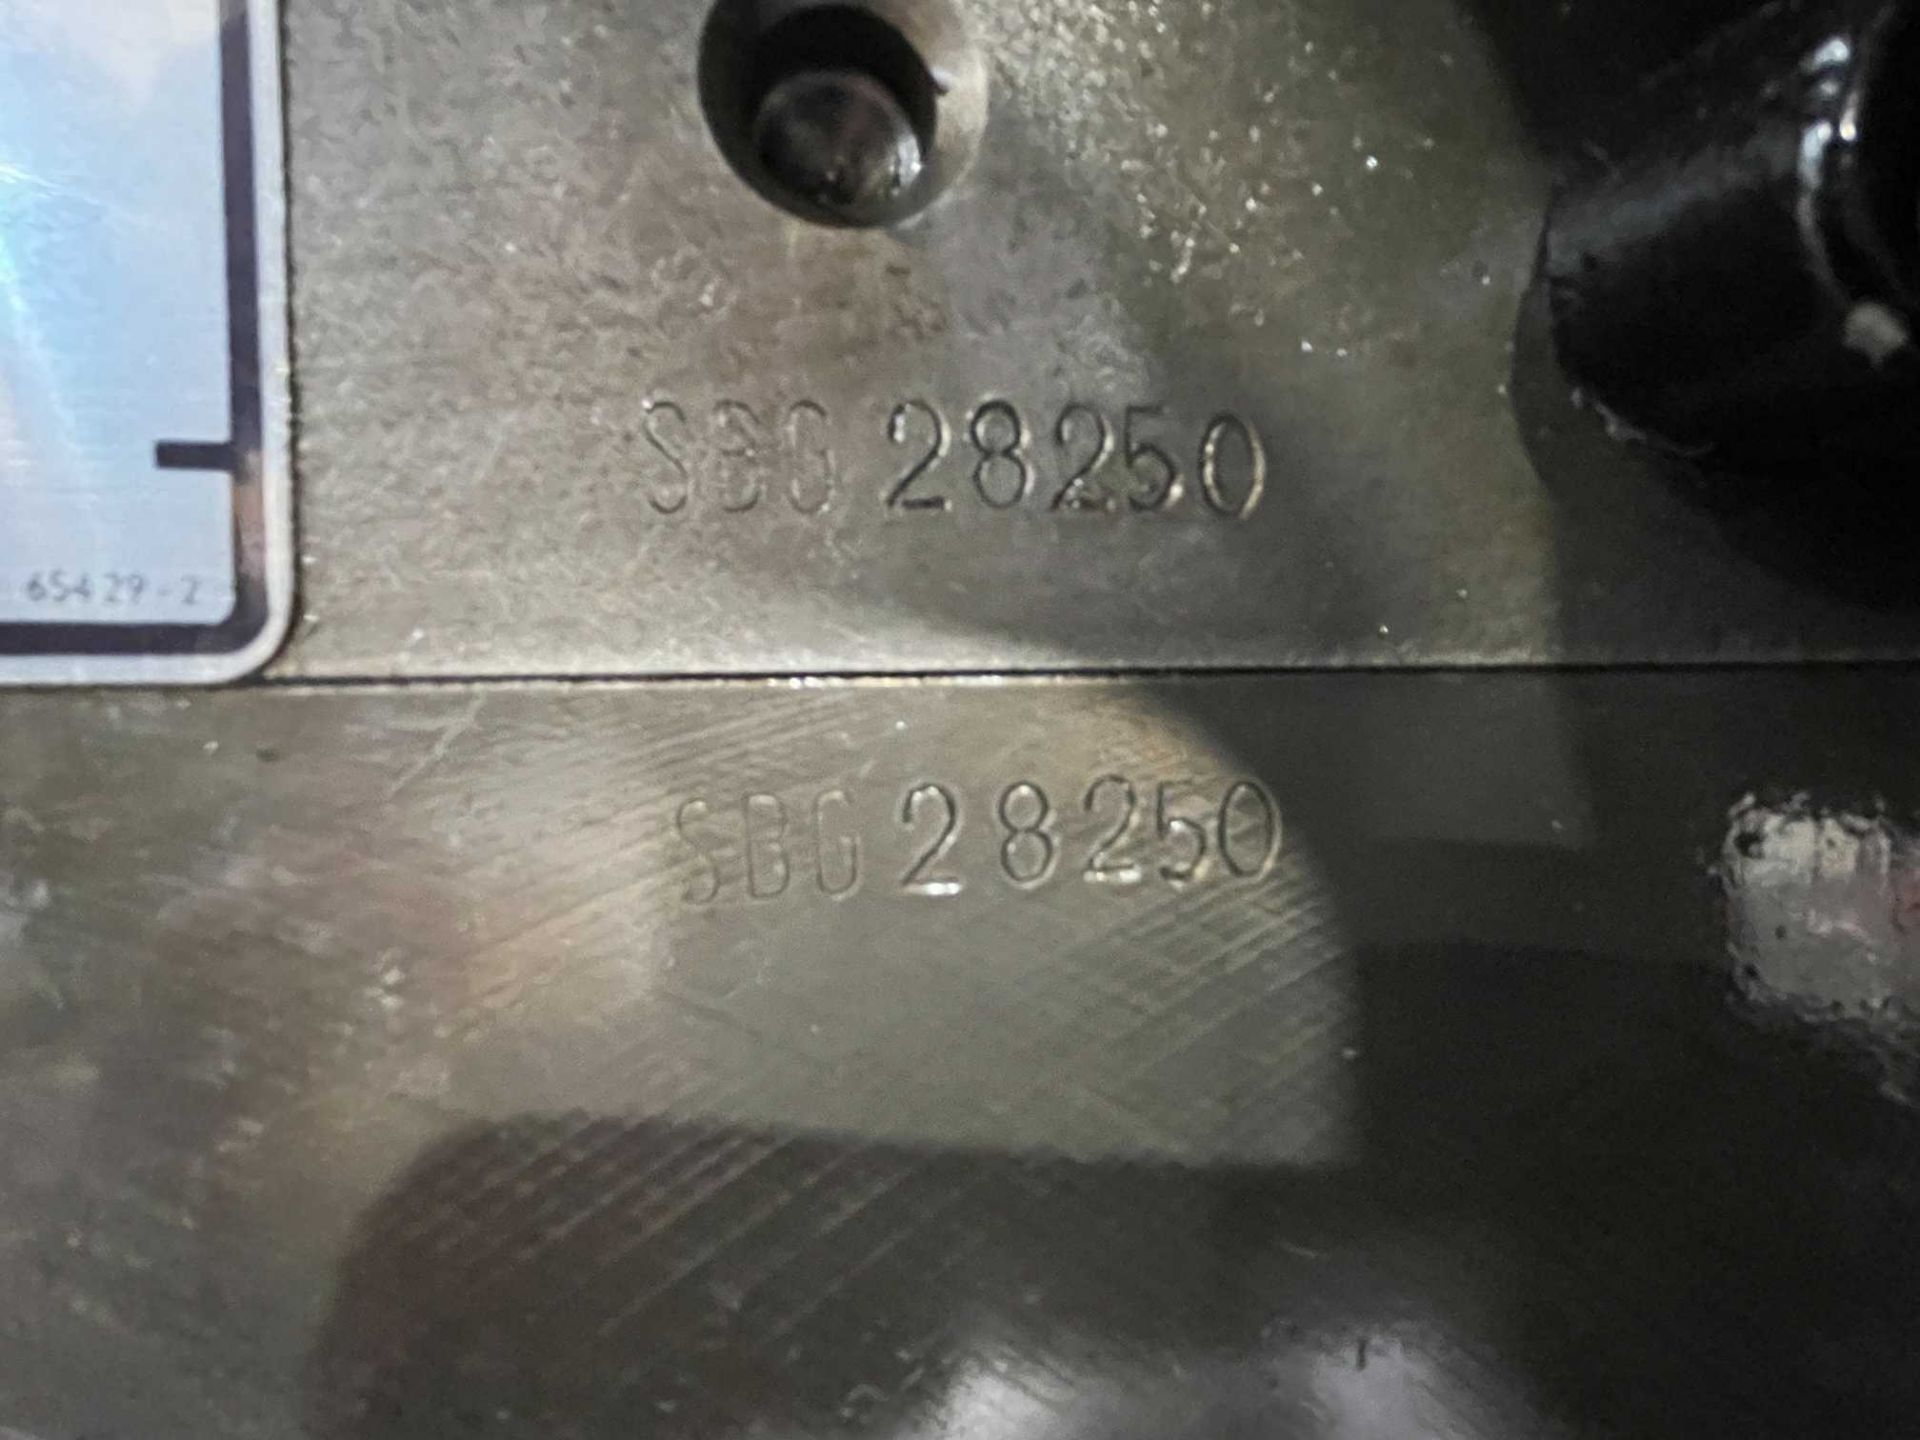 Heidelberg SBG cutting & creasing cylinder press (56cm x 77cm ); Serial No: SBG28248 - Image 8 of 9